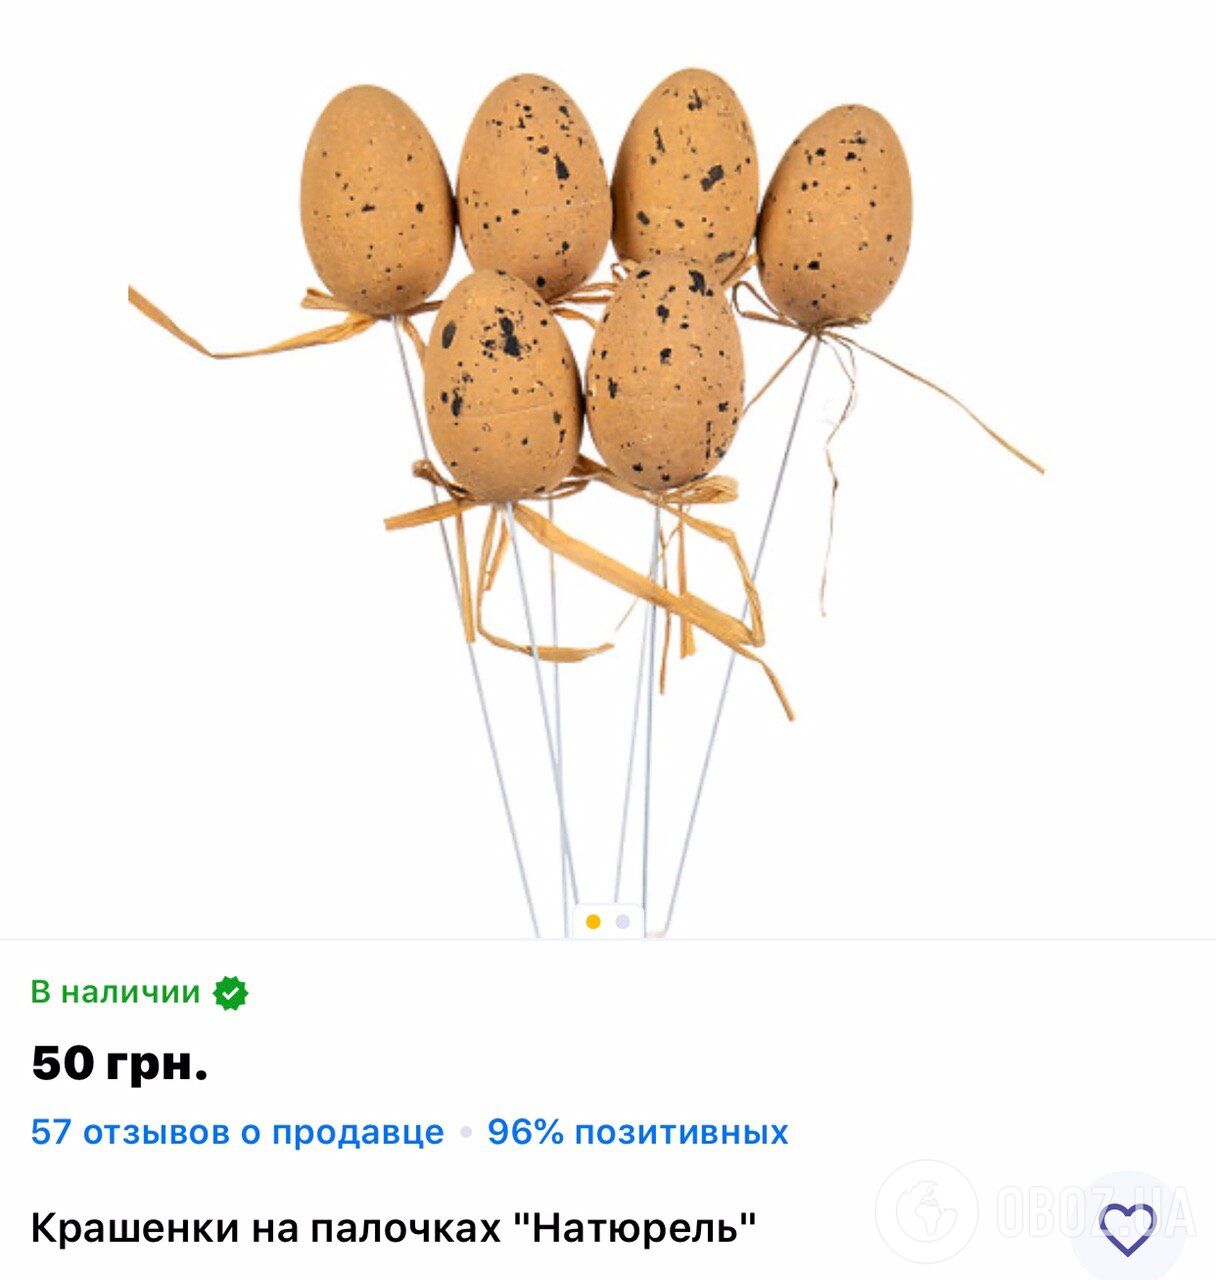 Декоративные яйца на палочках